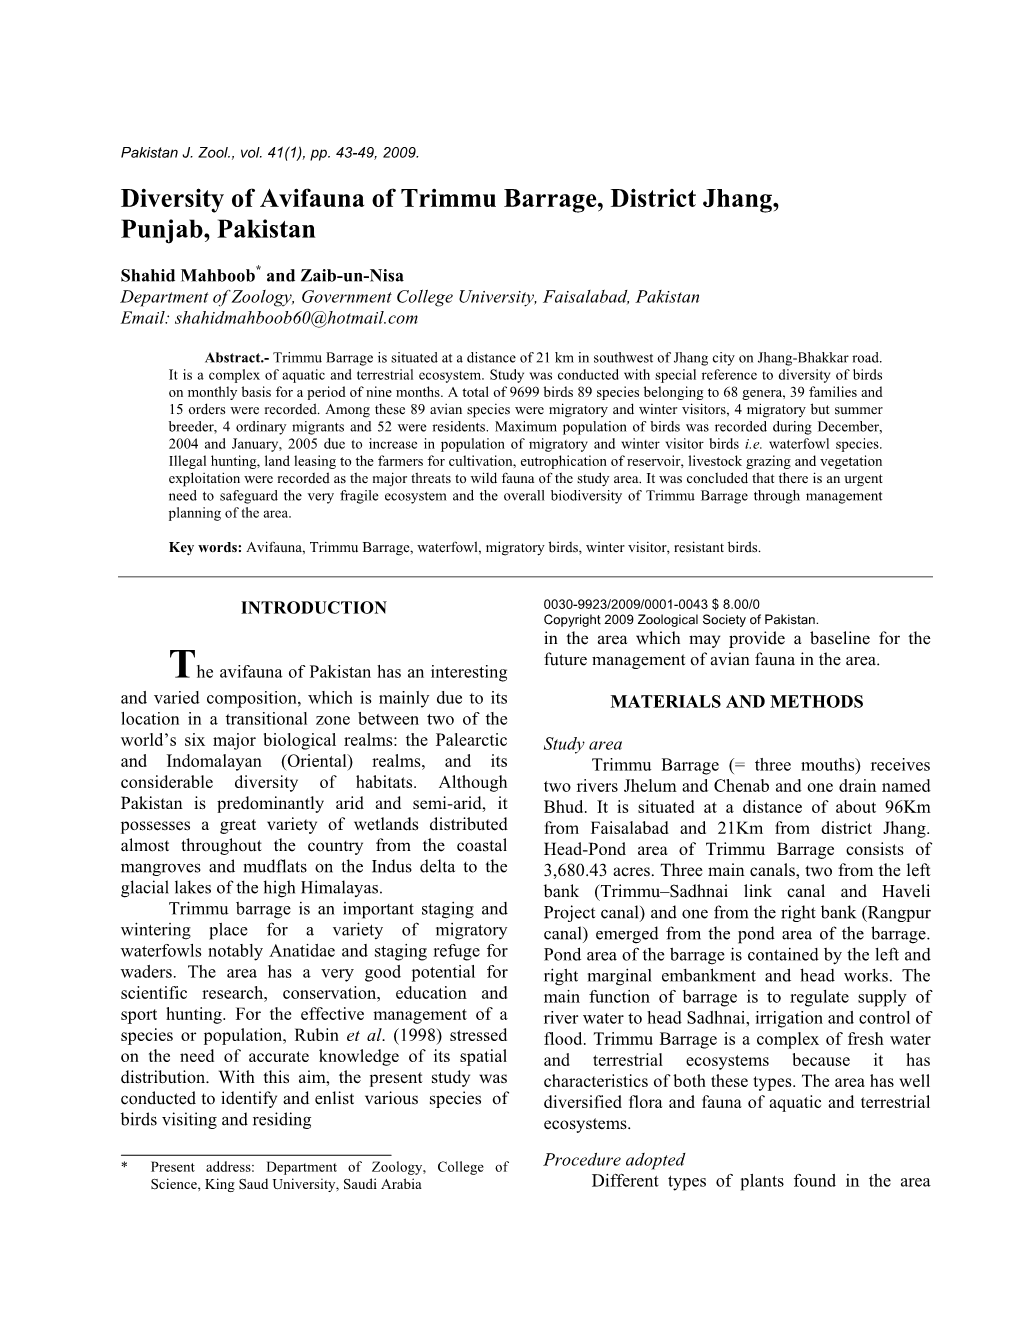 A Survey of Avifauna of Trimmu Barrage